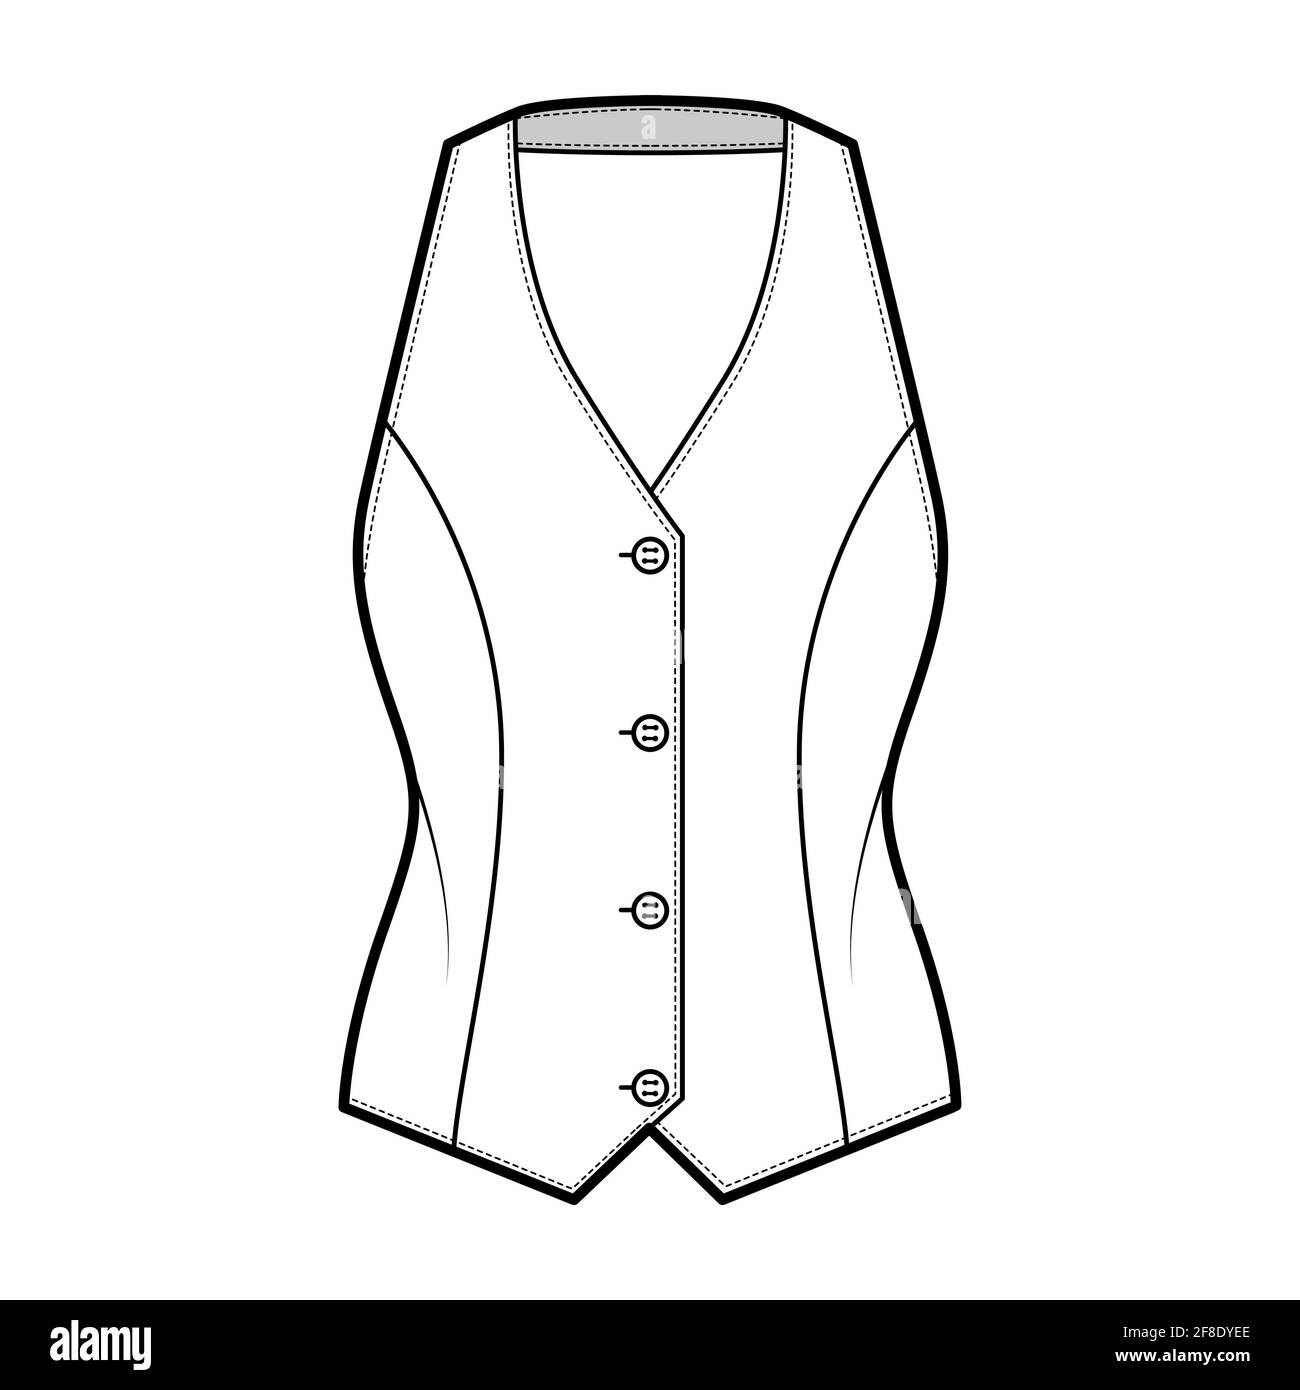 https://c8.alamy.com/comp/2F8DYEE/halter-vest-pique-waistcoat-technical-fashion-illustration-with-backless-v-neckline-button-up-closure-slim-fit-flat-apparel-template-front-white-color-style-women-men-unisex-top-cad-mockup-2F8DYEE.jpg